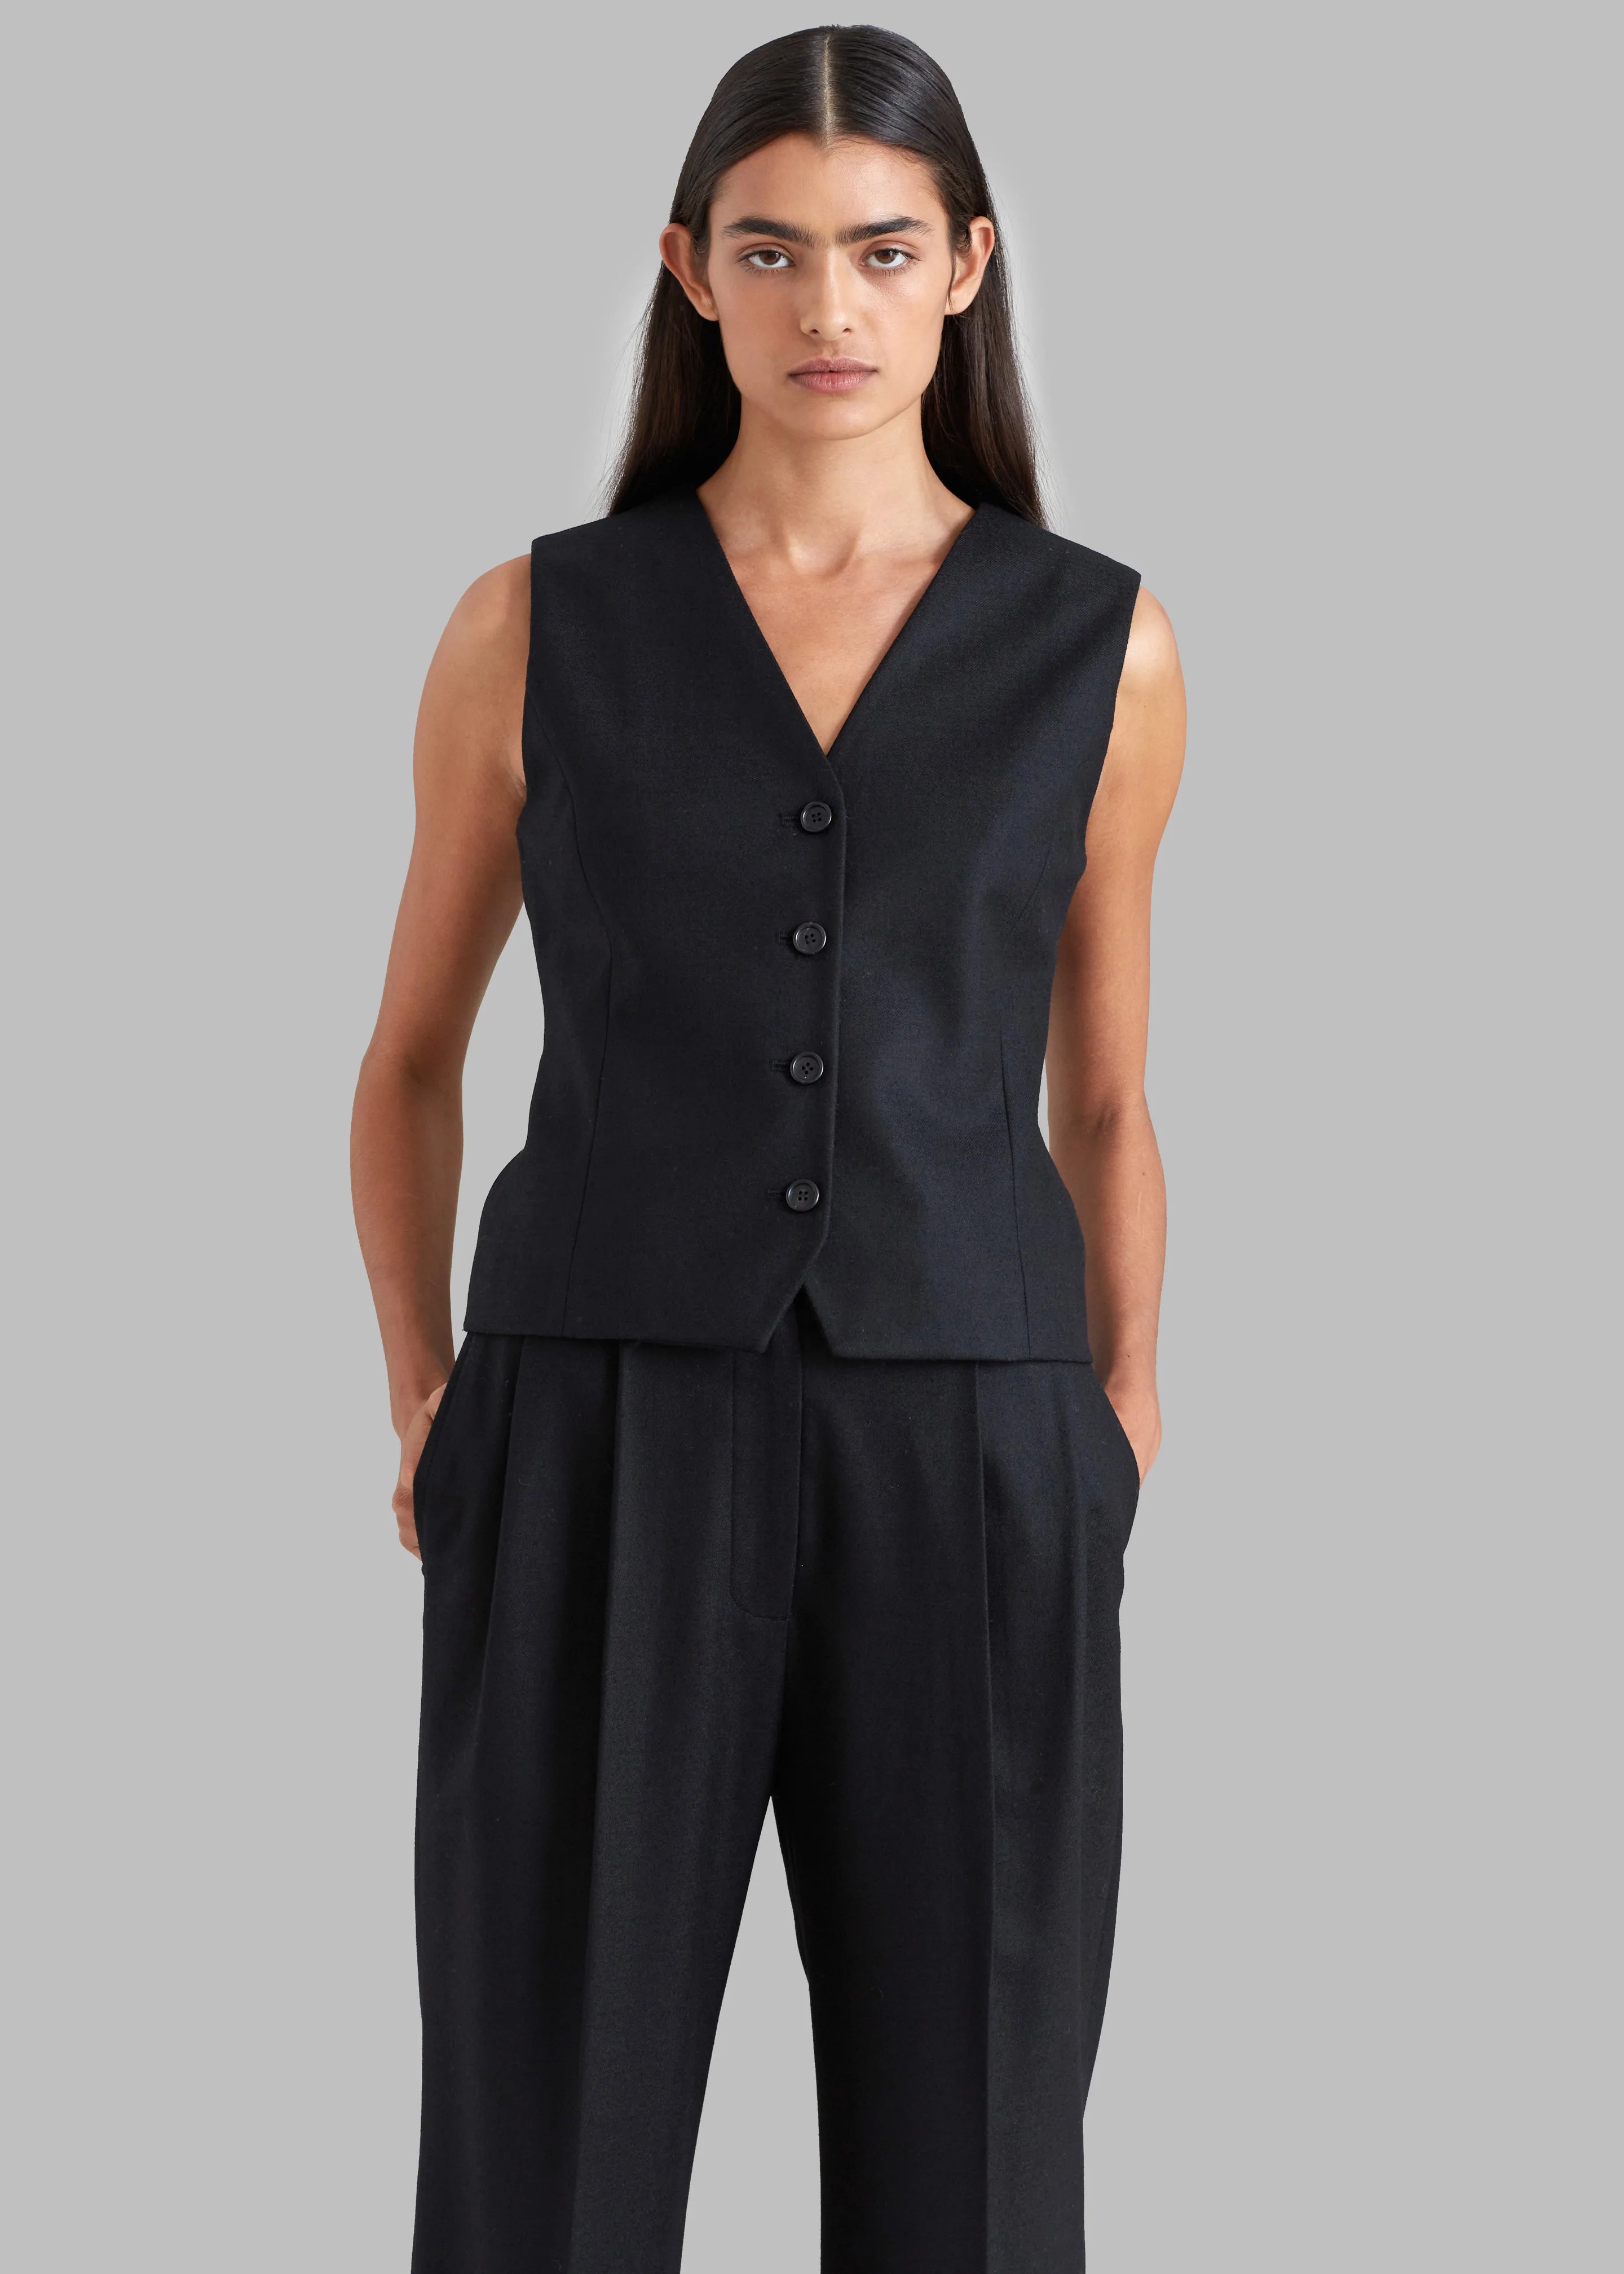 Eleanor Wool Vest - Black - 2